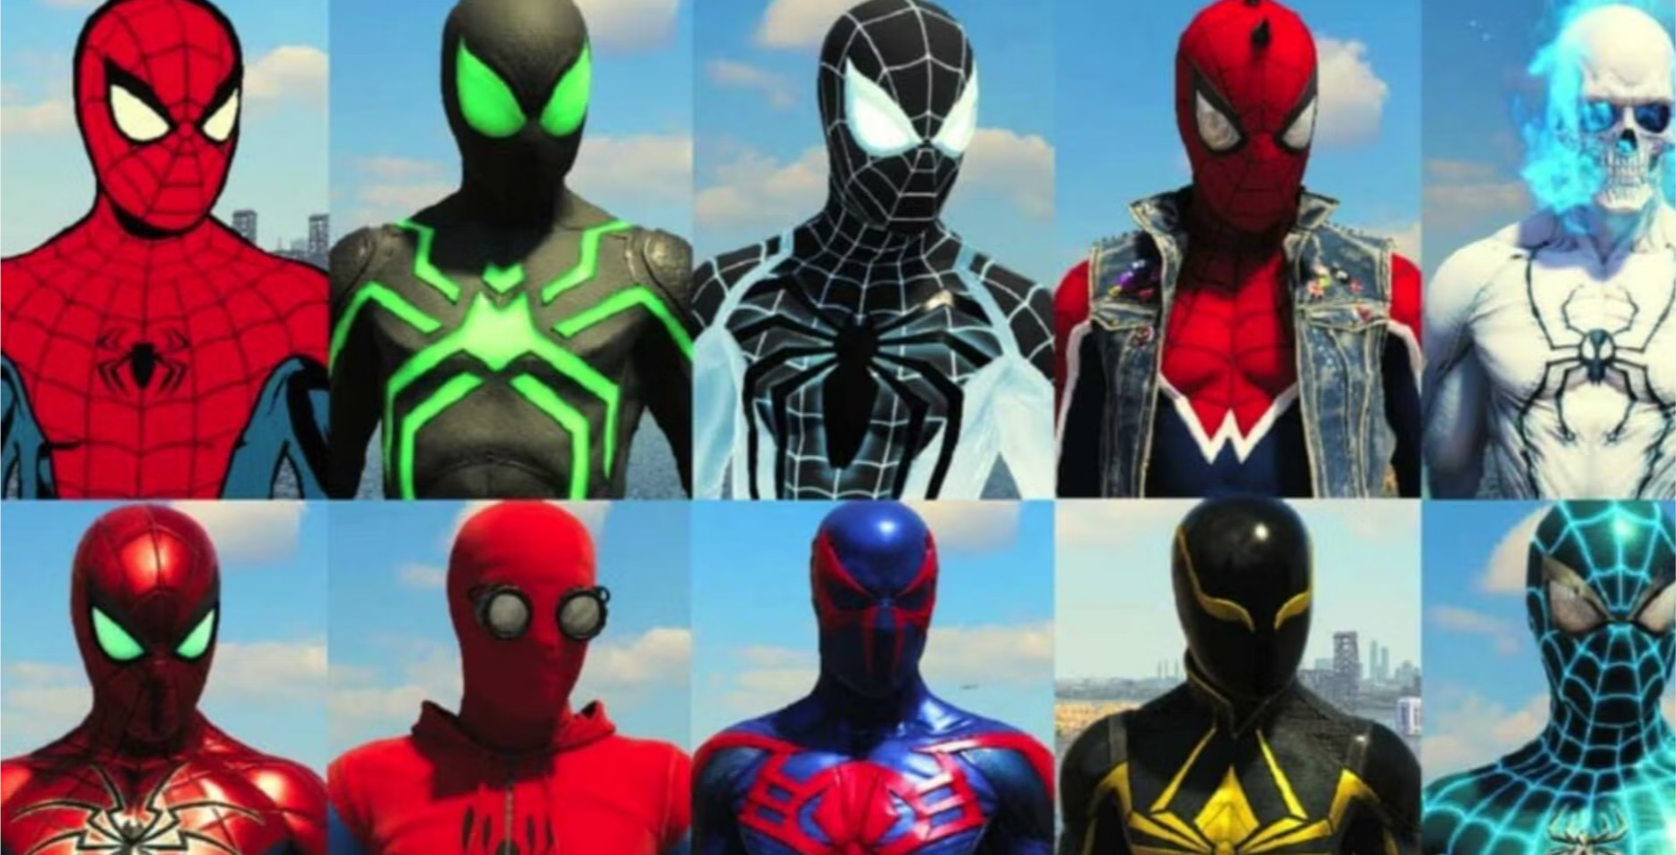 Spider Suits